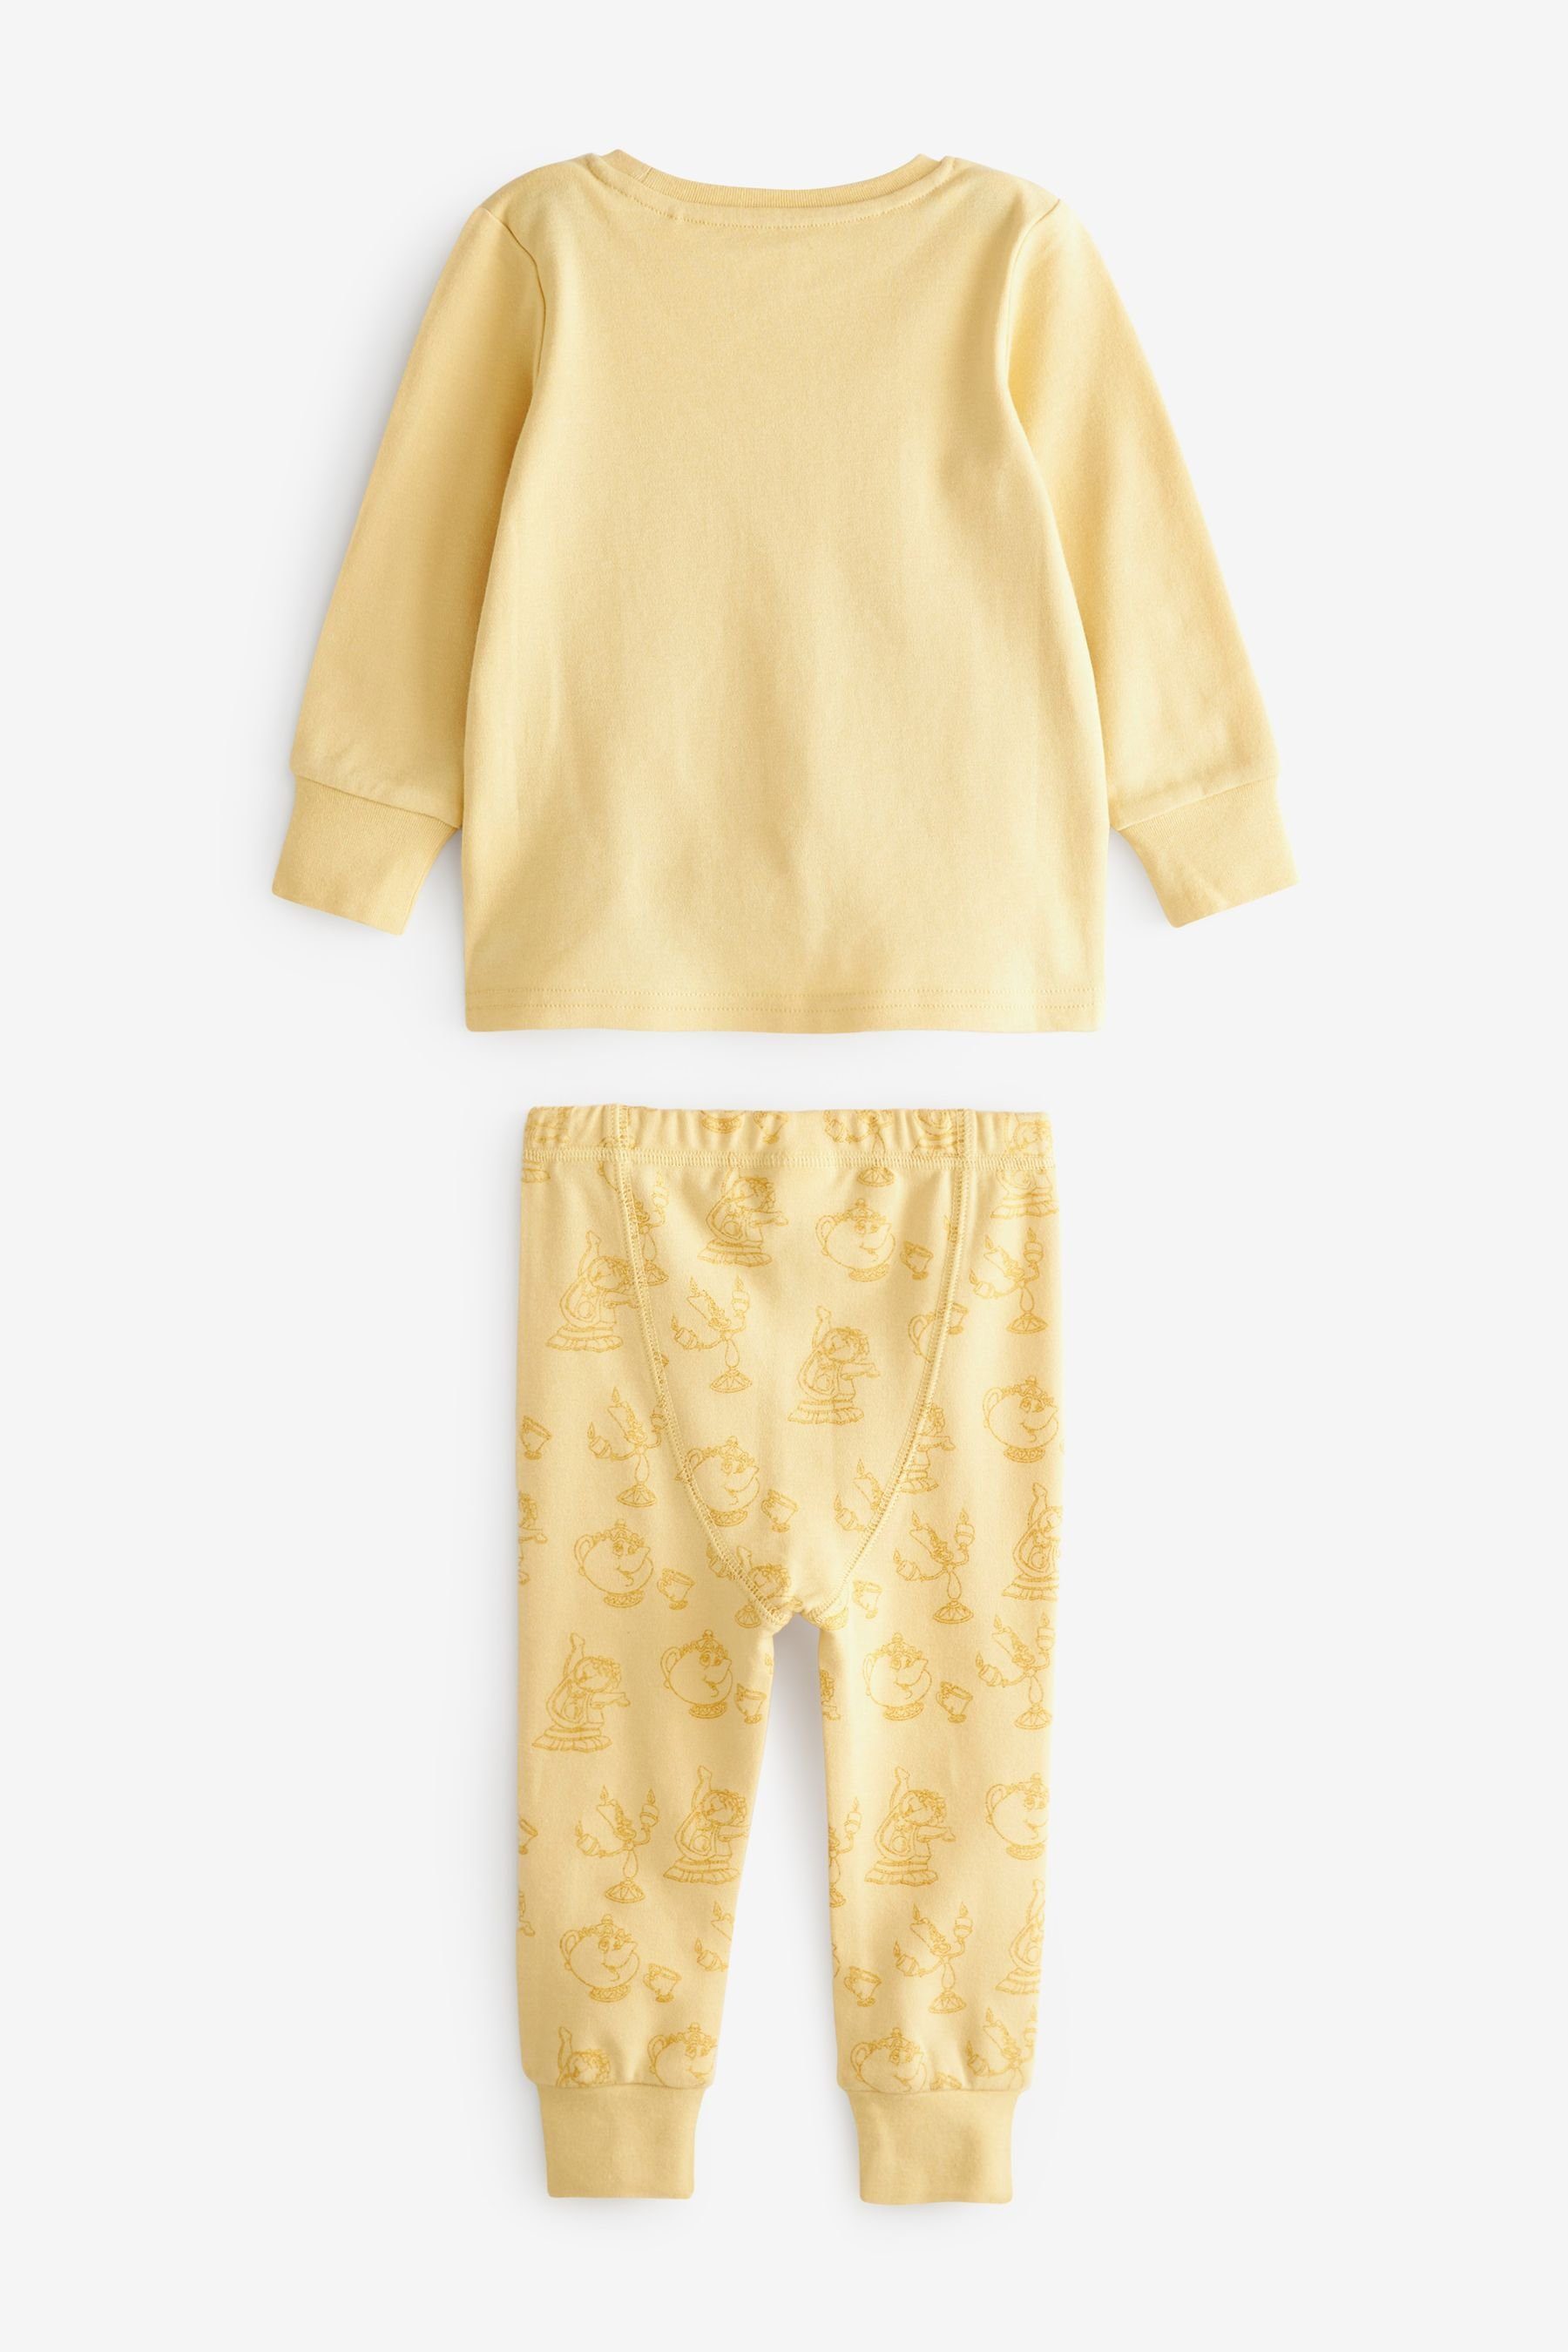 Next Pyjama Kuscheliger Princess tlg) Disney Yellow Pyjama, Belle 1er-Pack (2